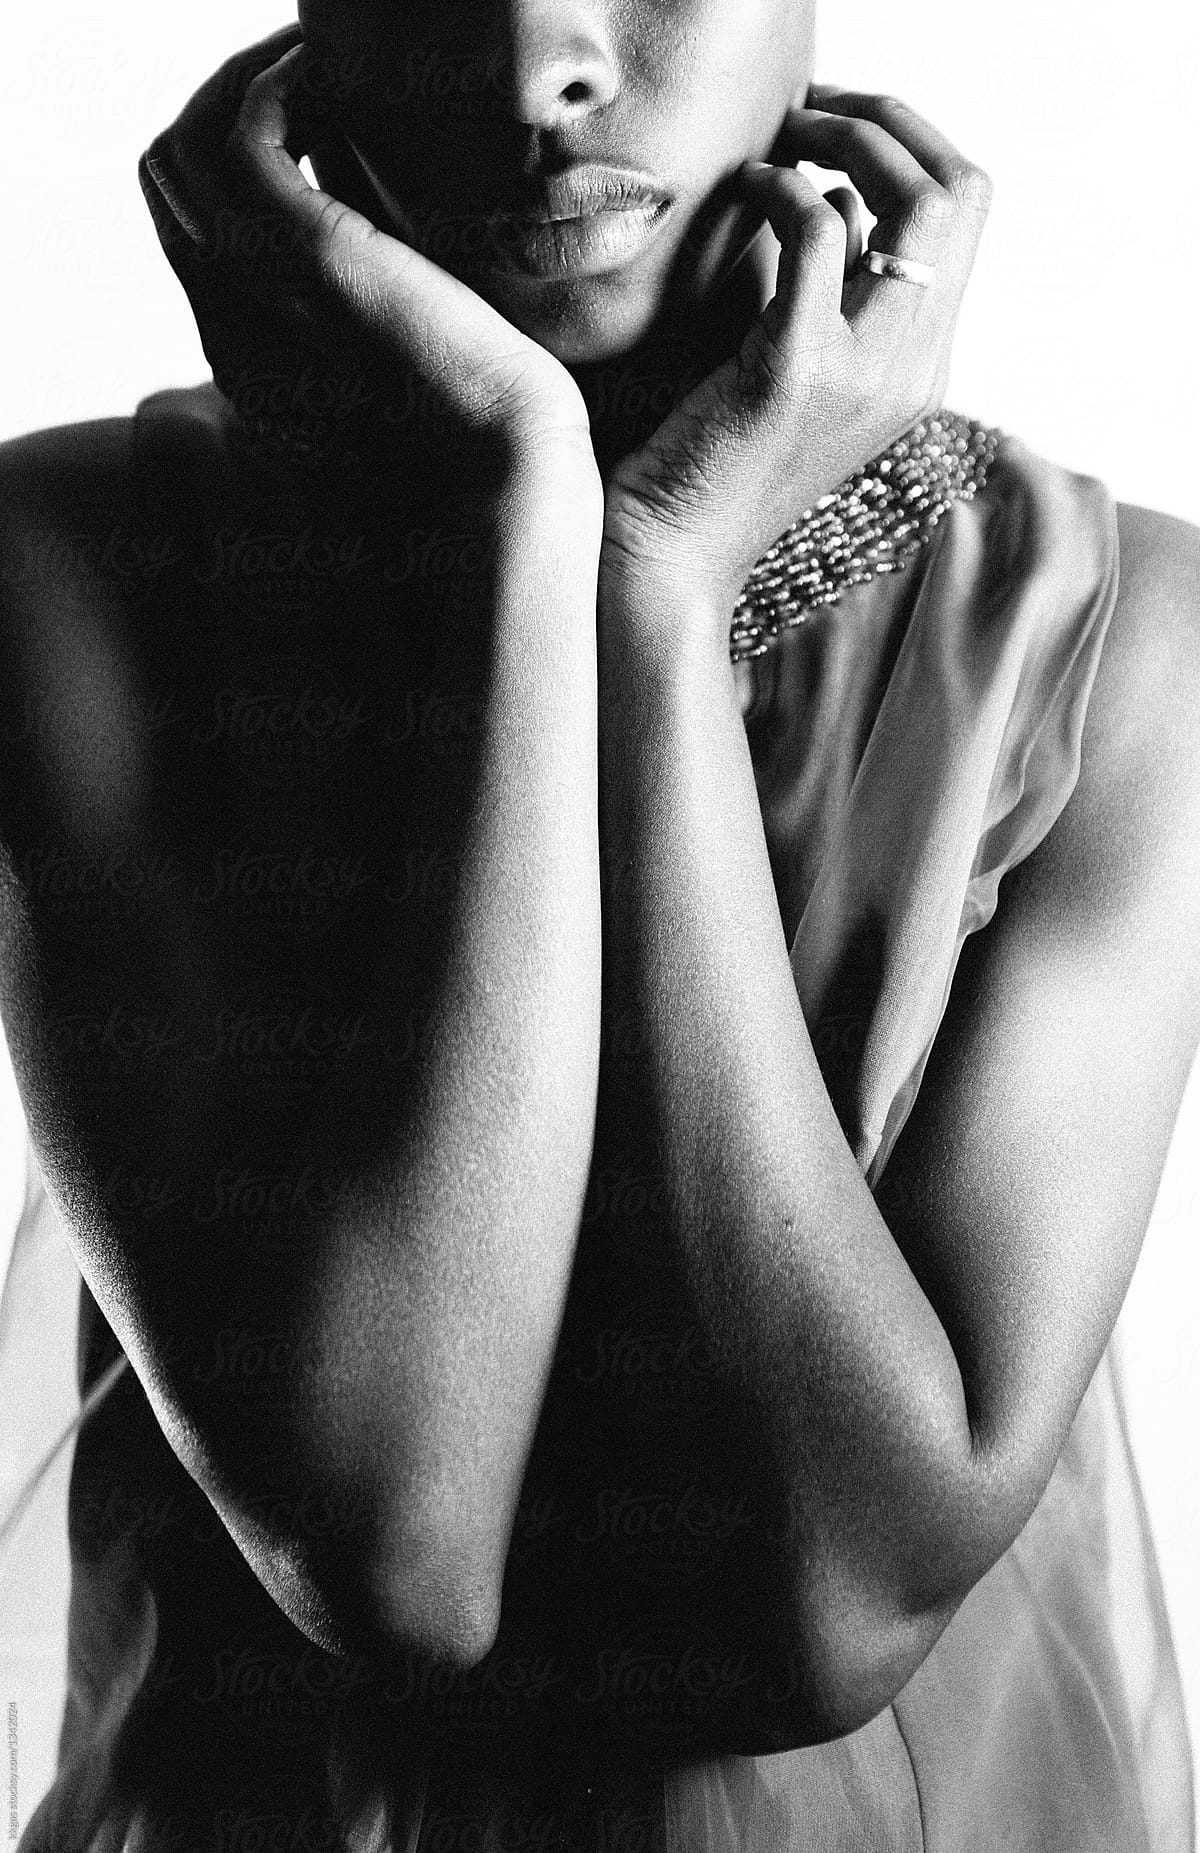 Black and white portrait of a stylish black woman